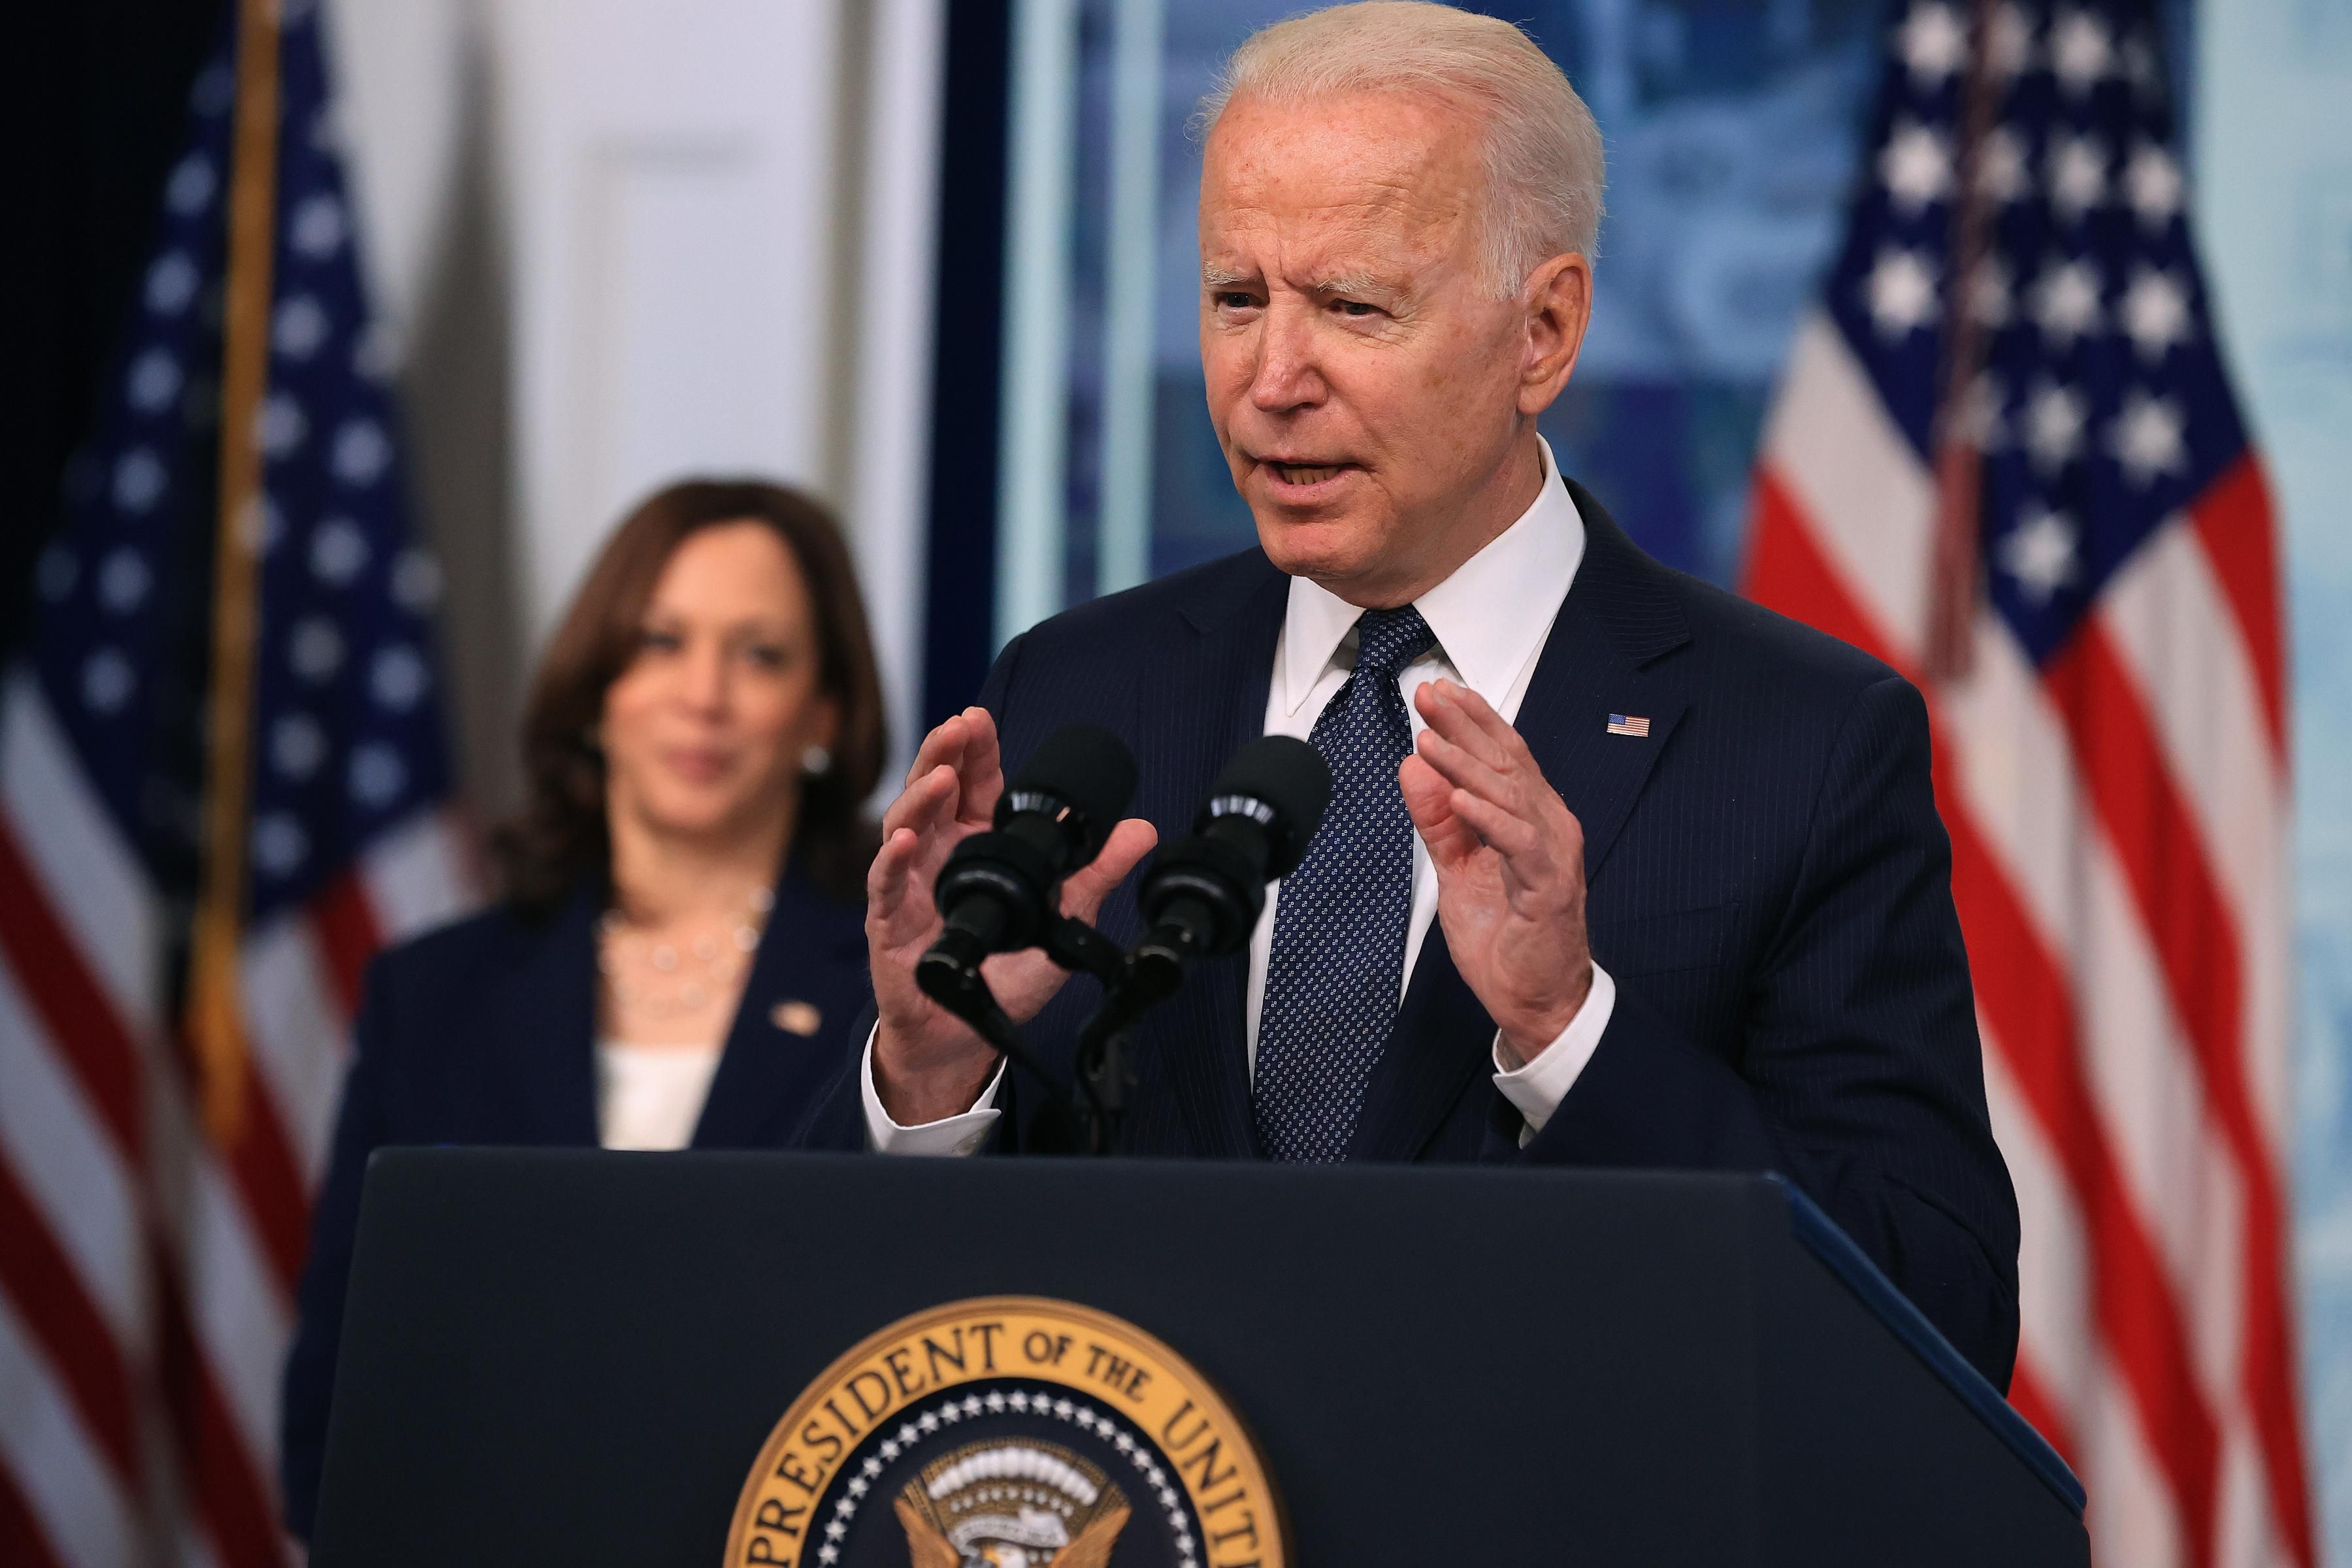 President Joe Biden speaks during a press conference